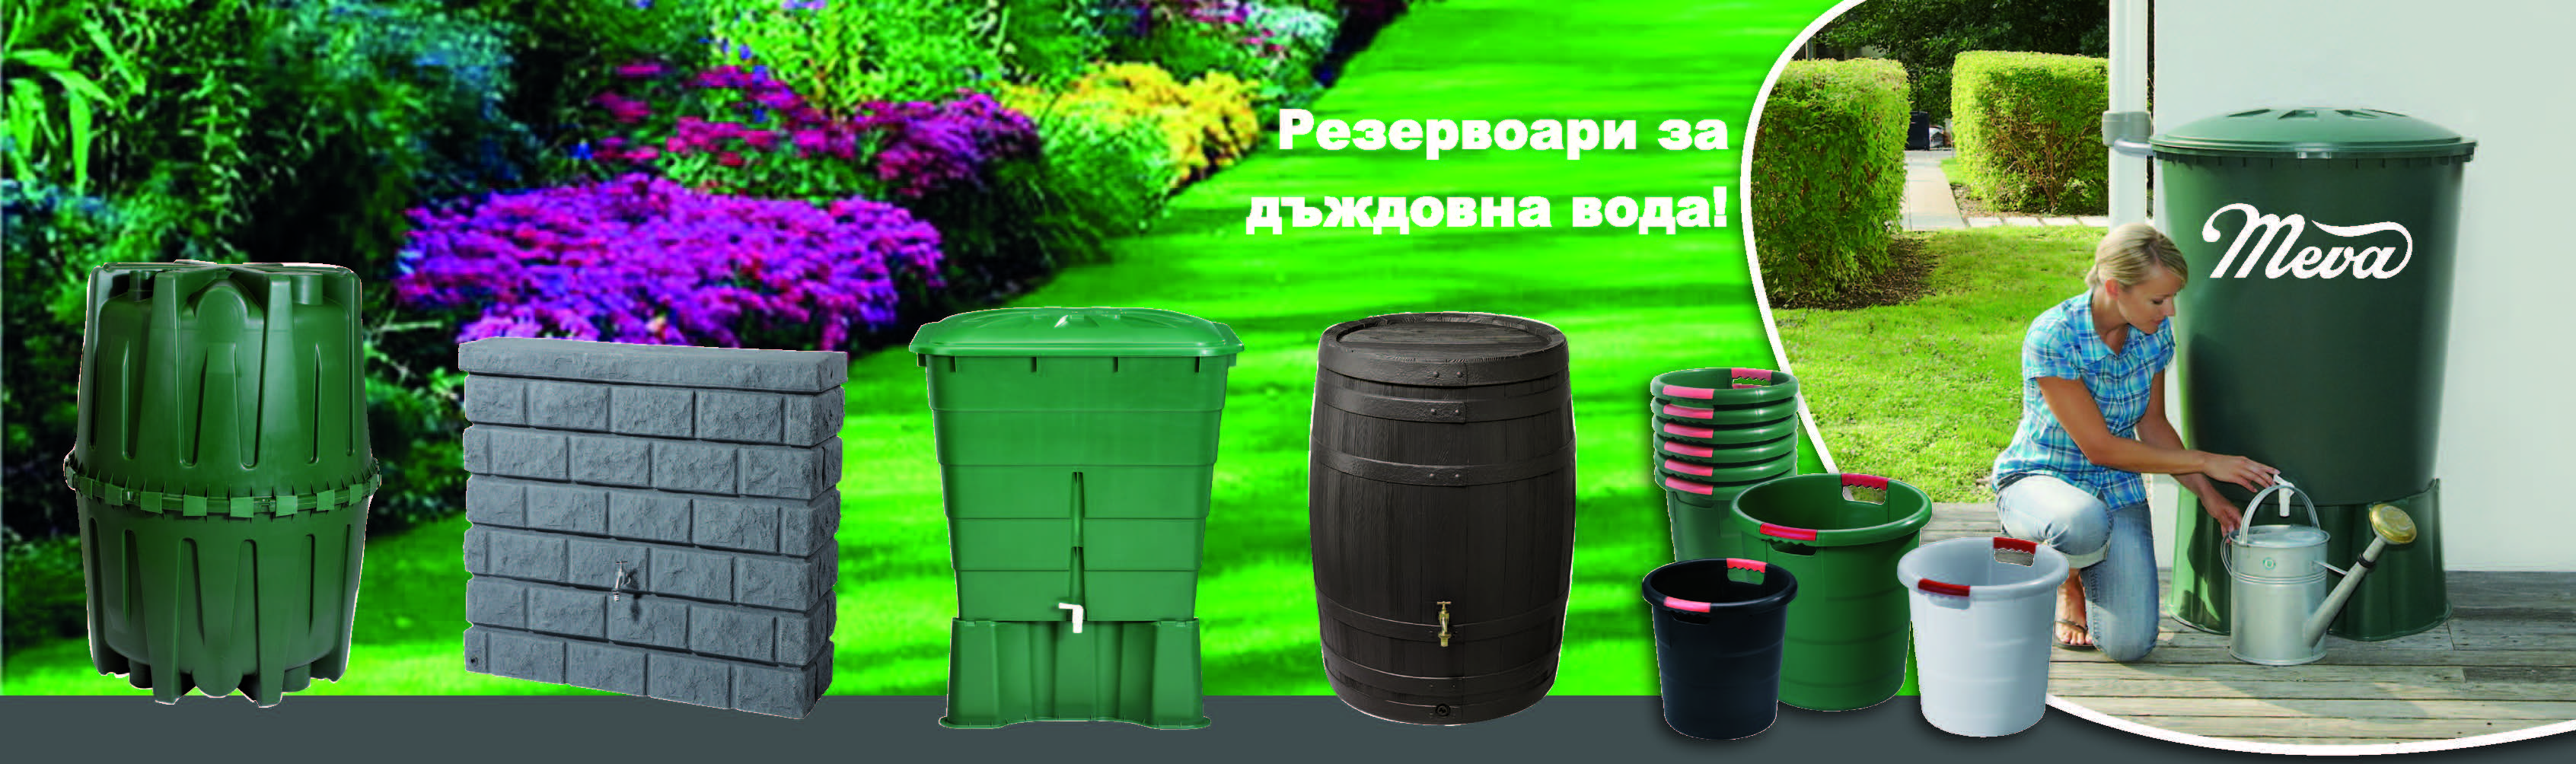 slide /fotky9423/slider/Bannery-madarsko-web-BG_Page_3.jpg